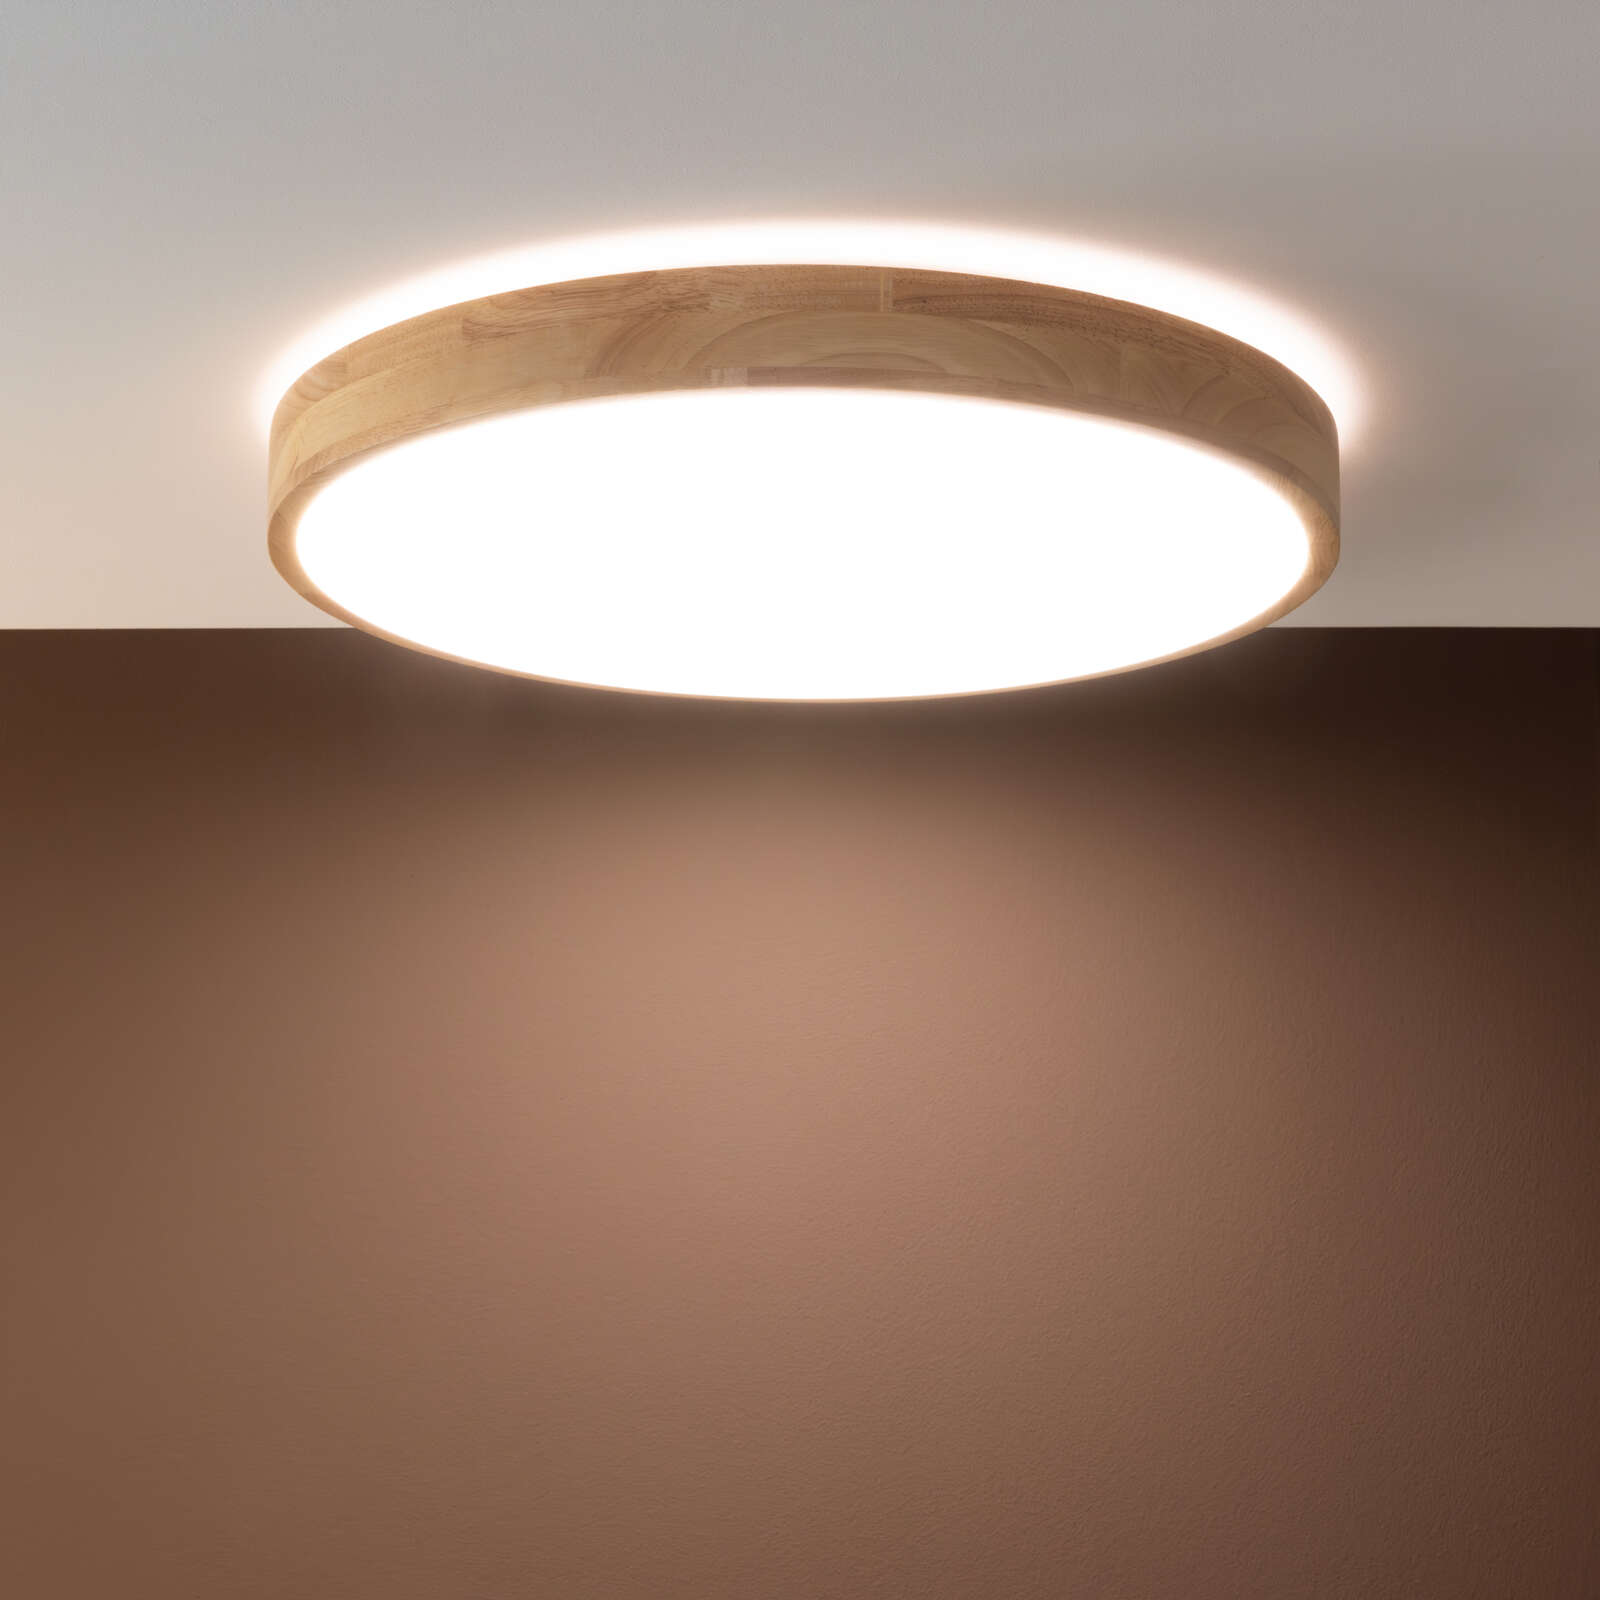             Plastic wall and ceiling light - Niklas 10 - Brown
        